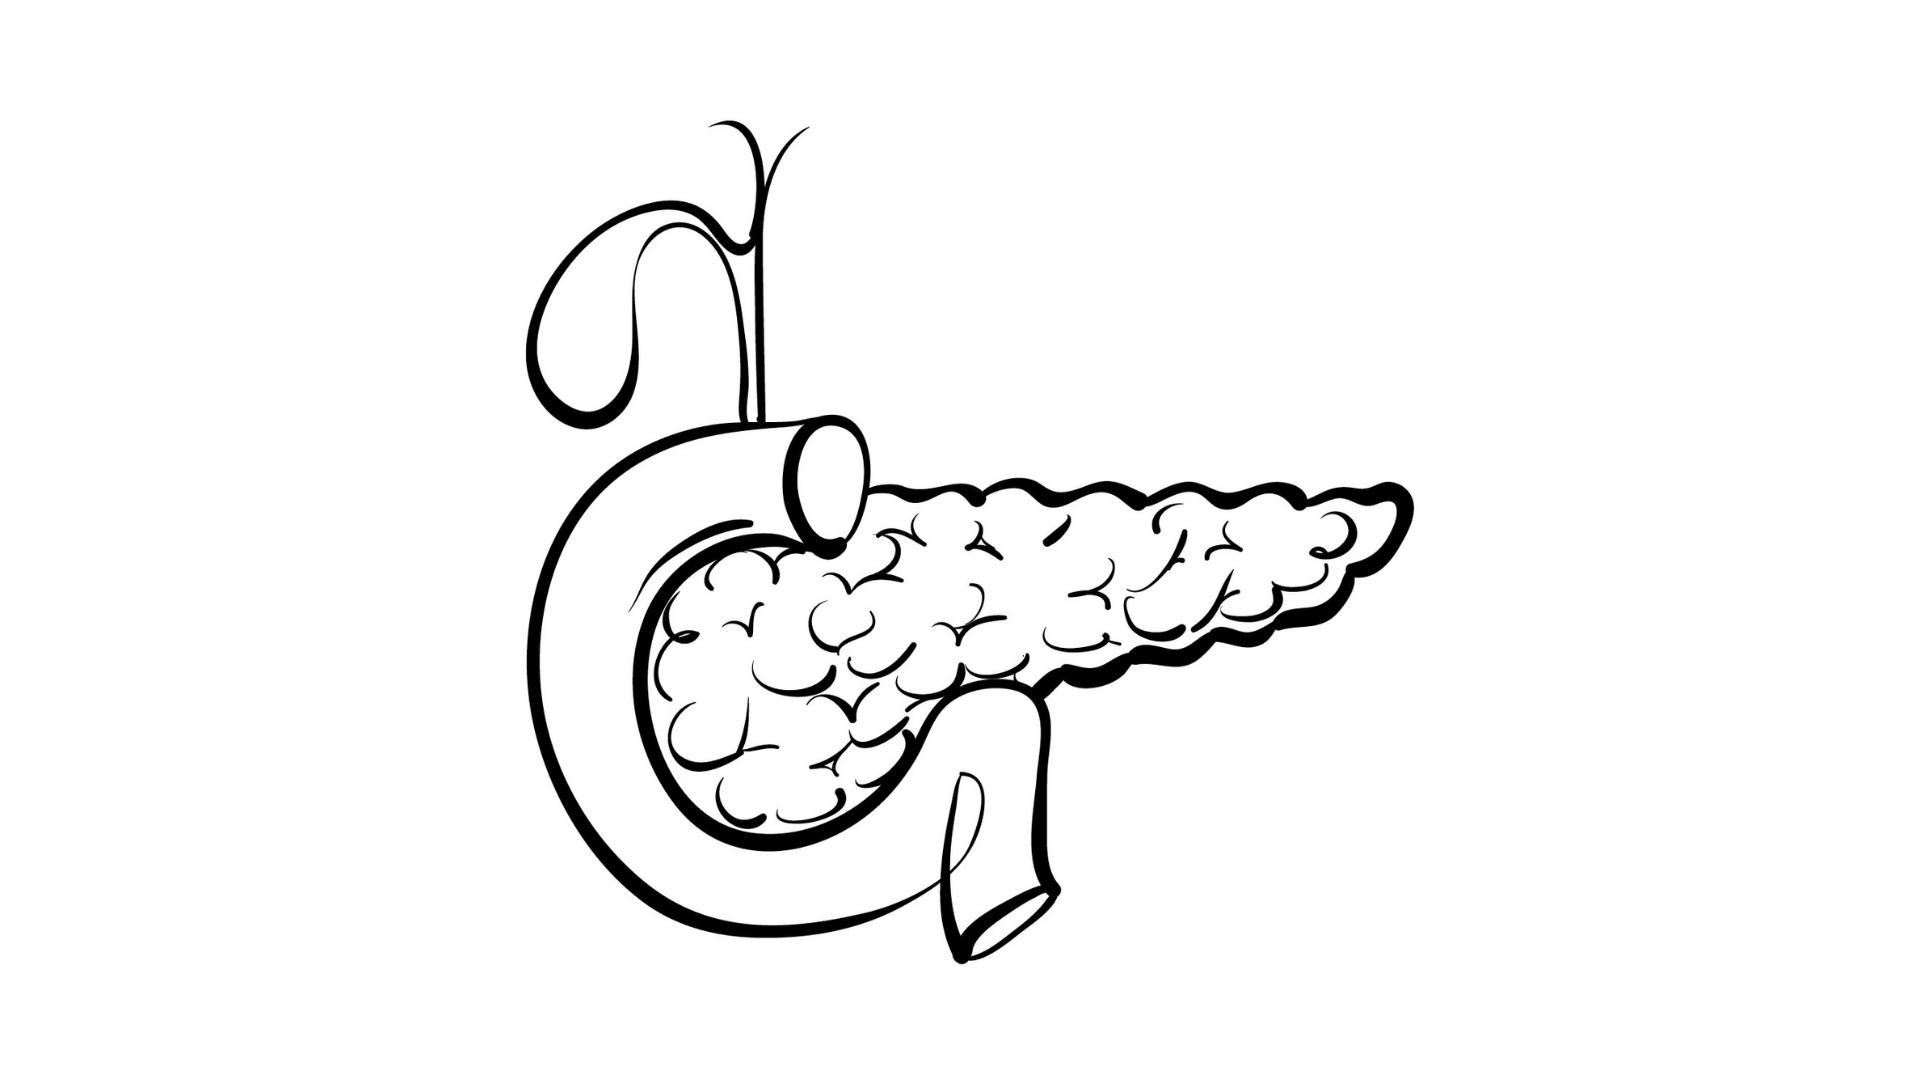 Sketch of the pancreas.